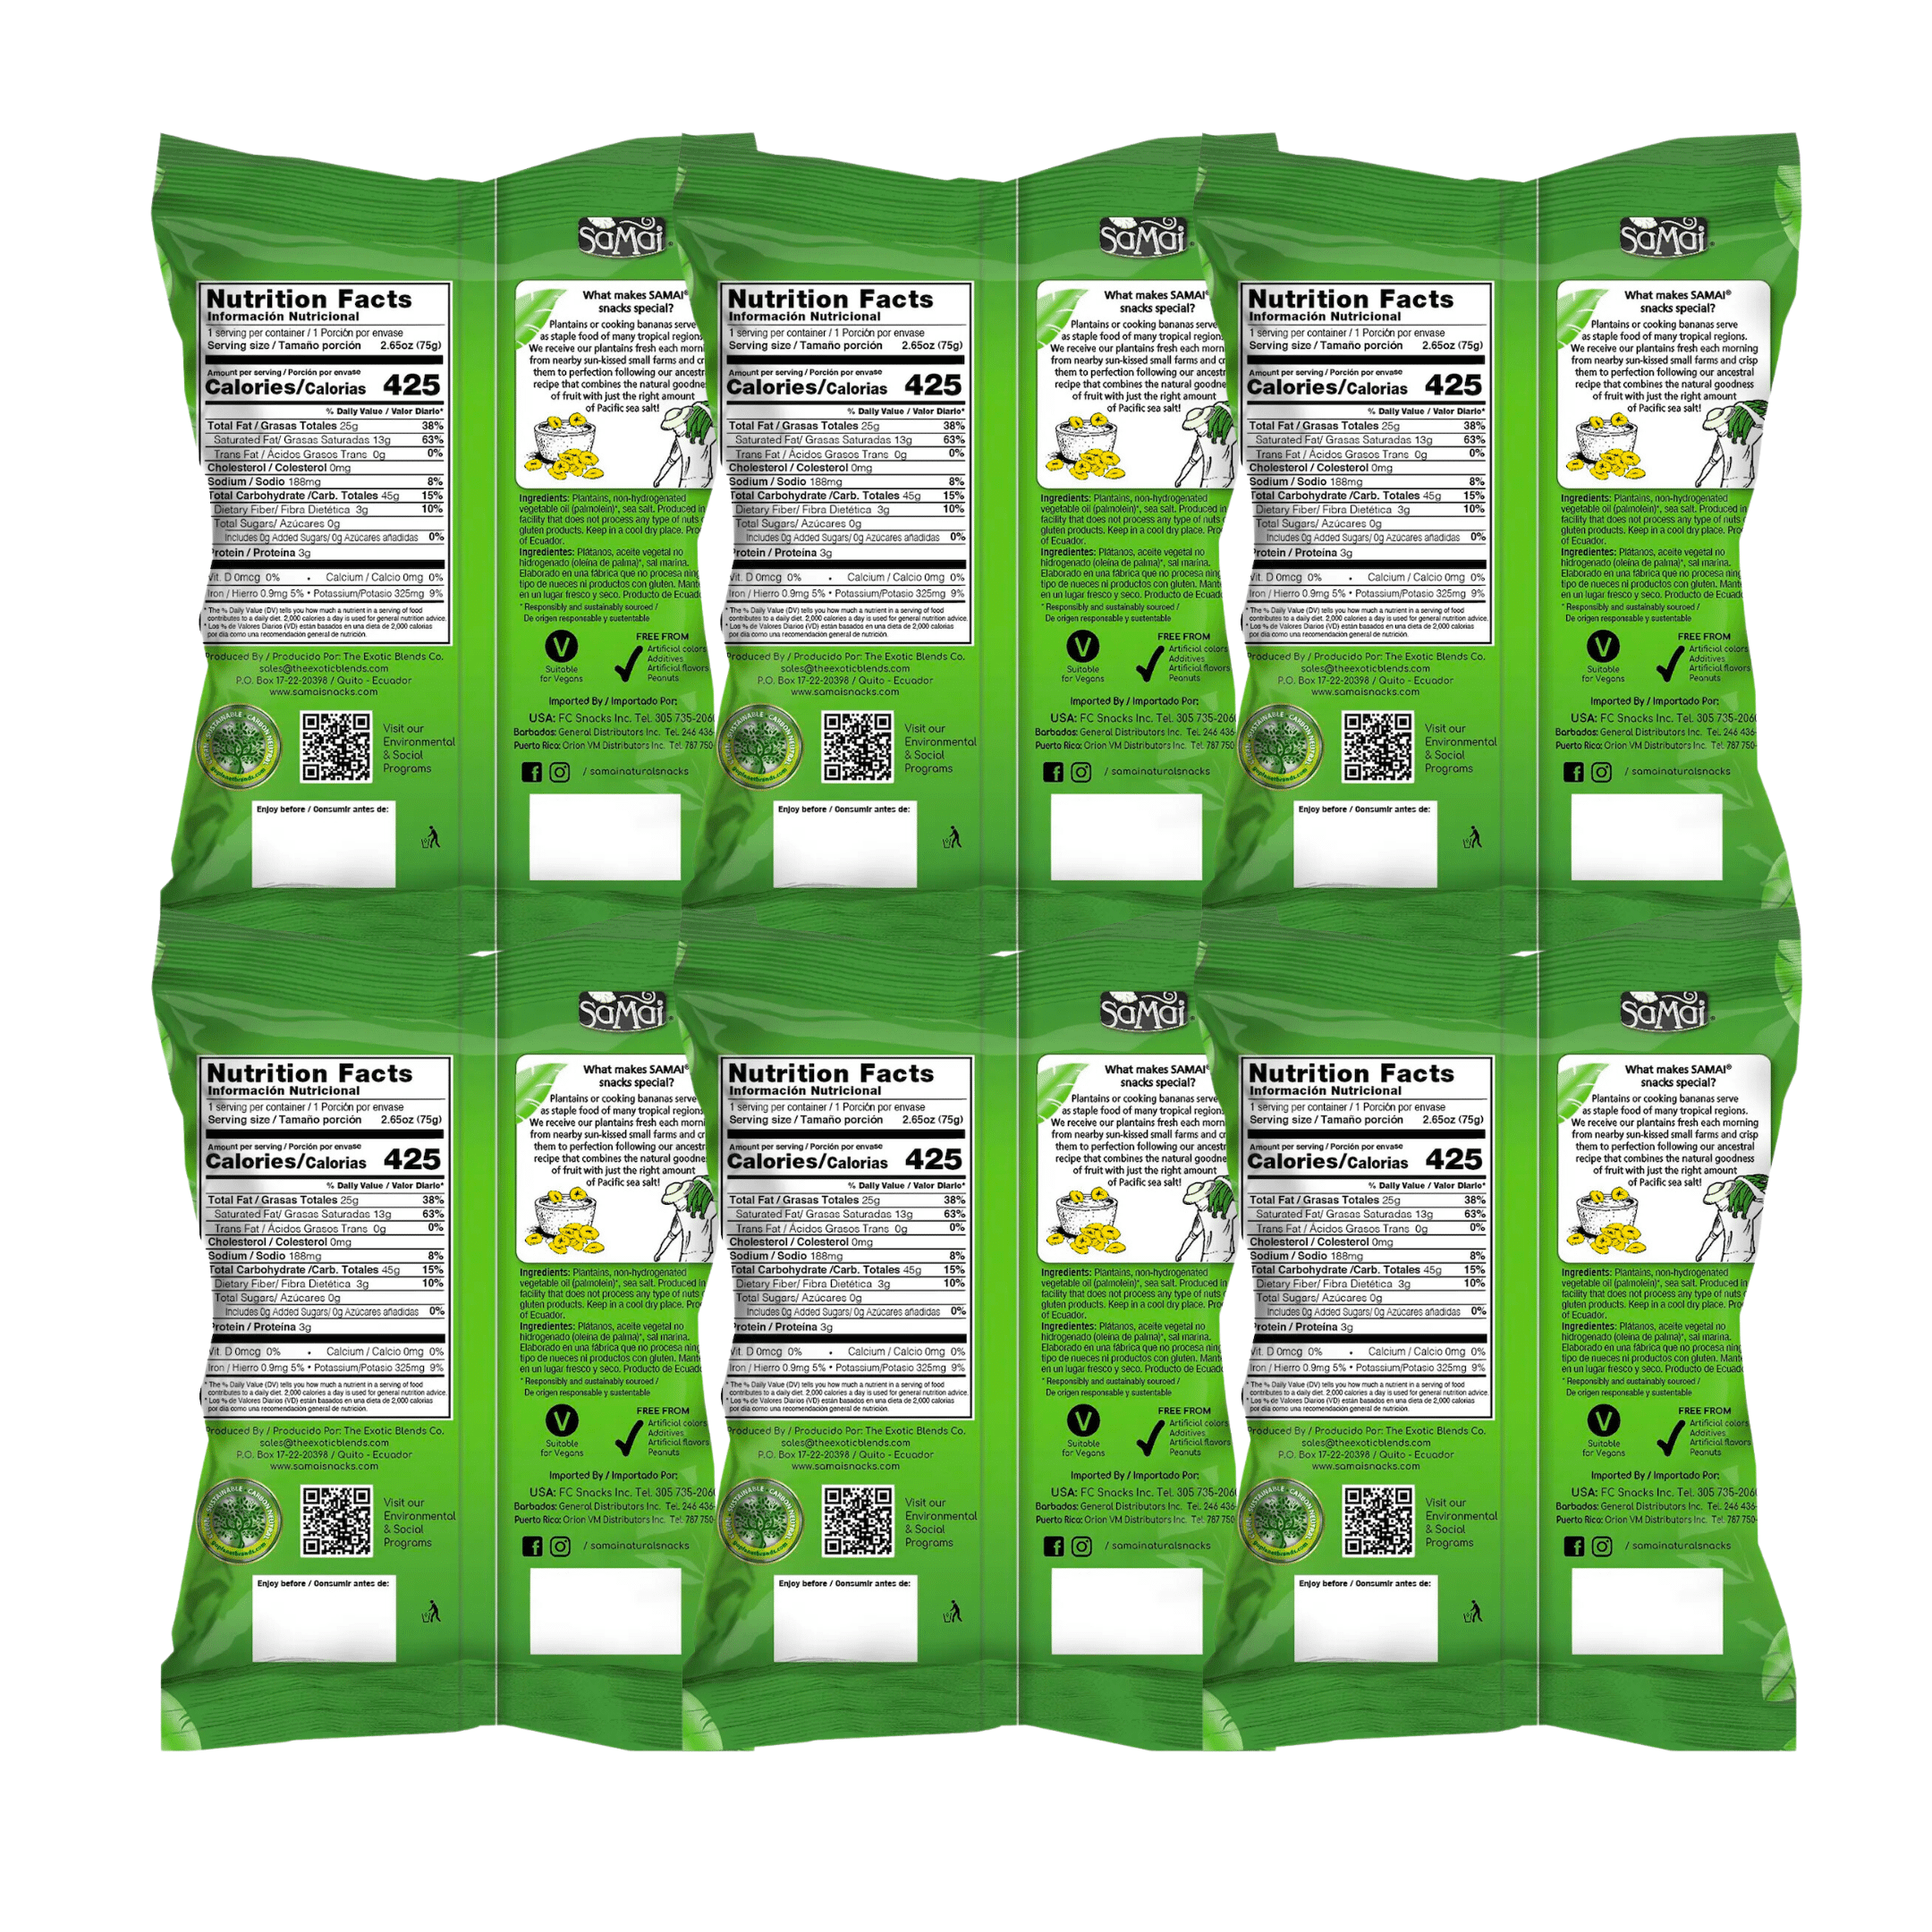  SAMAI Chili Plantain Chips 2.65oz, Pack of 15 - All Natural,  Non-GMO, Gluten Free and Kosher